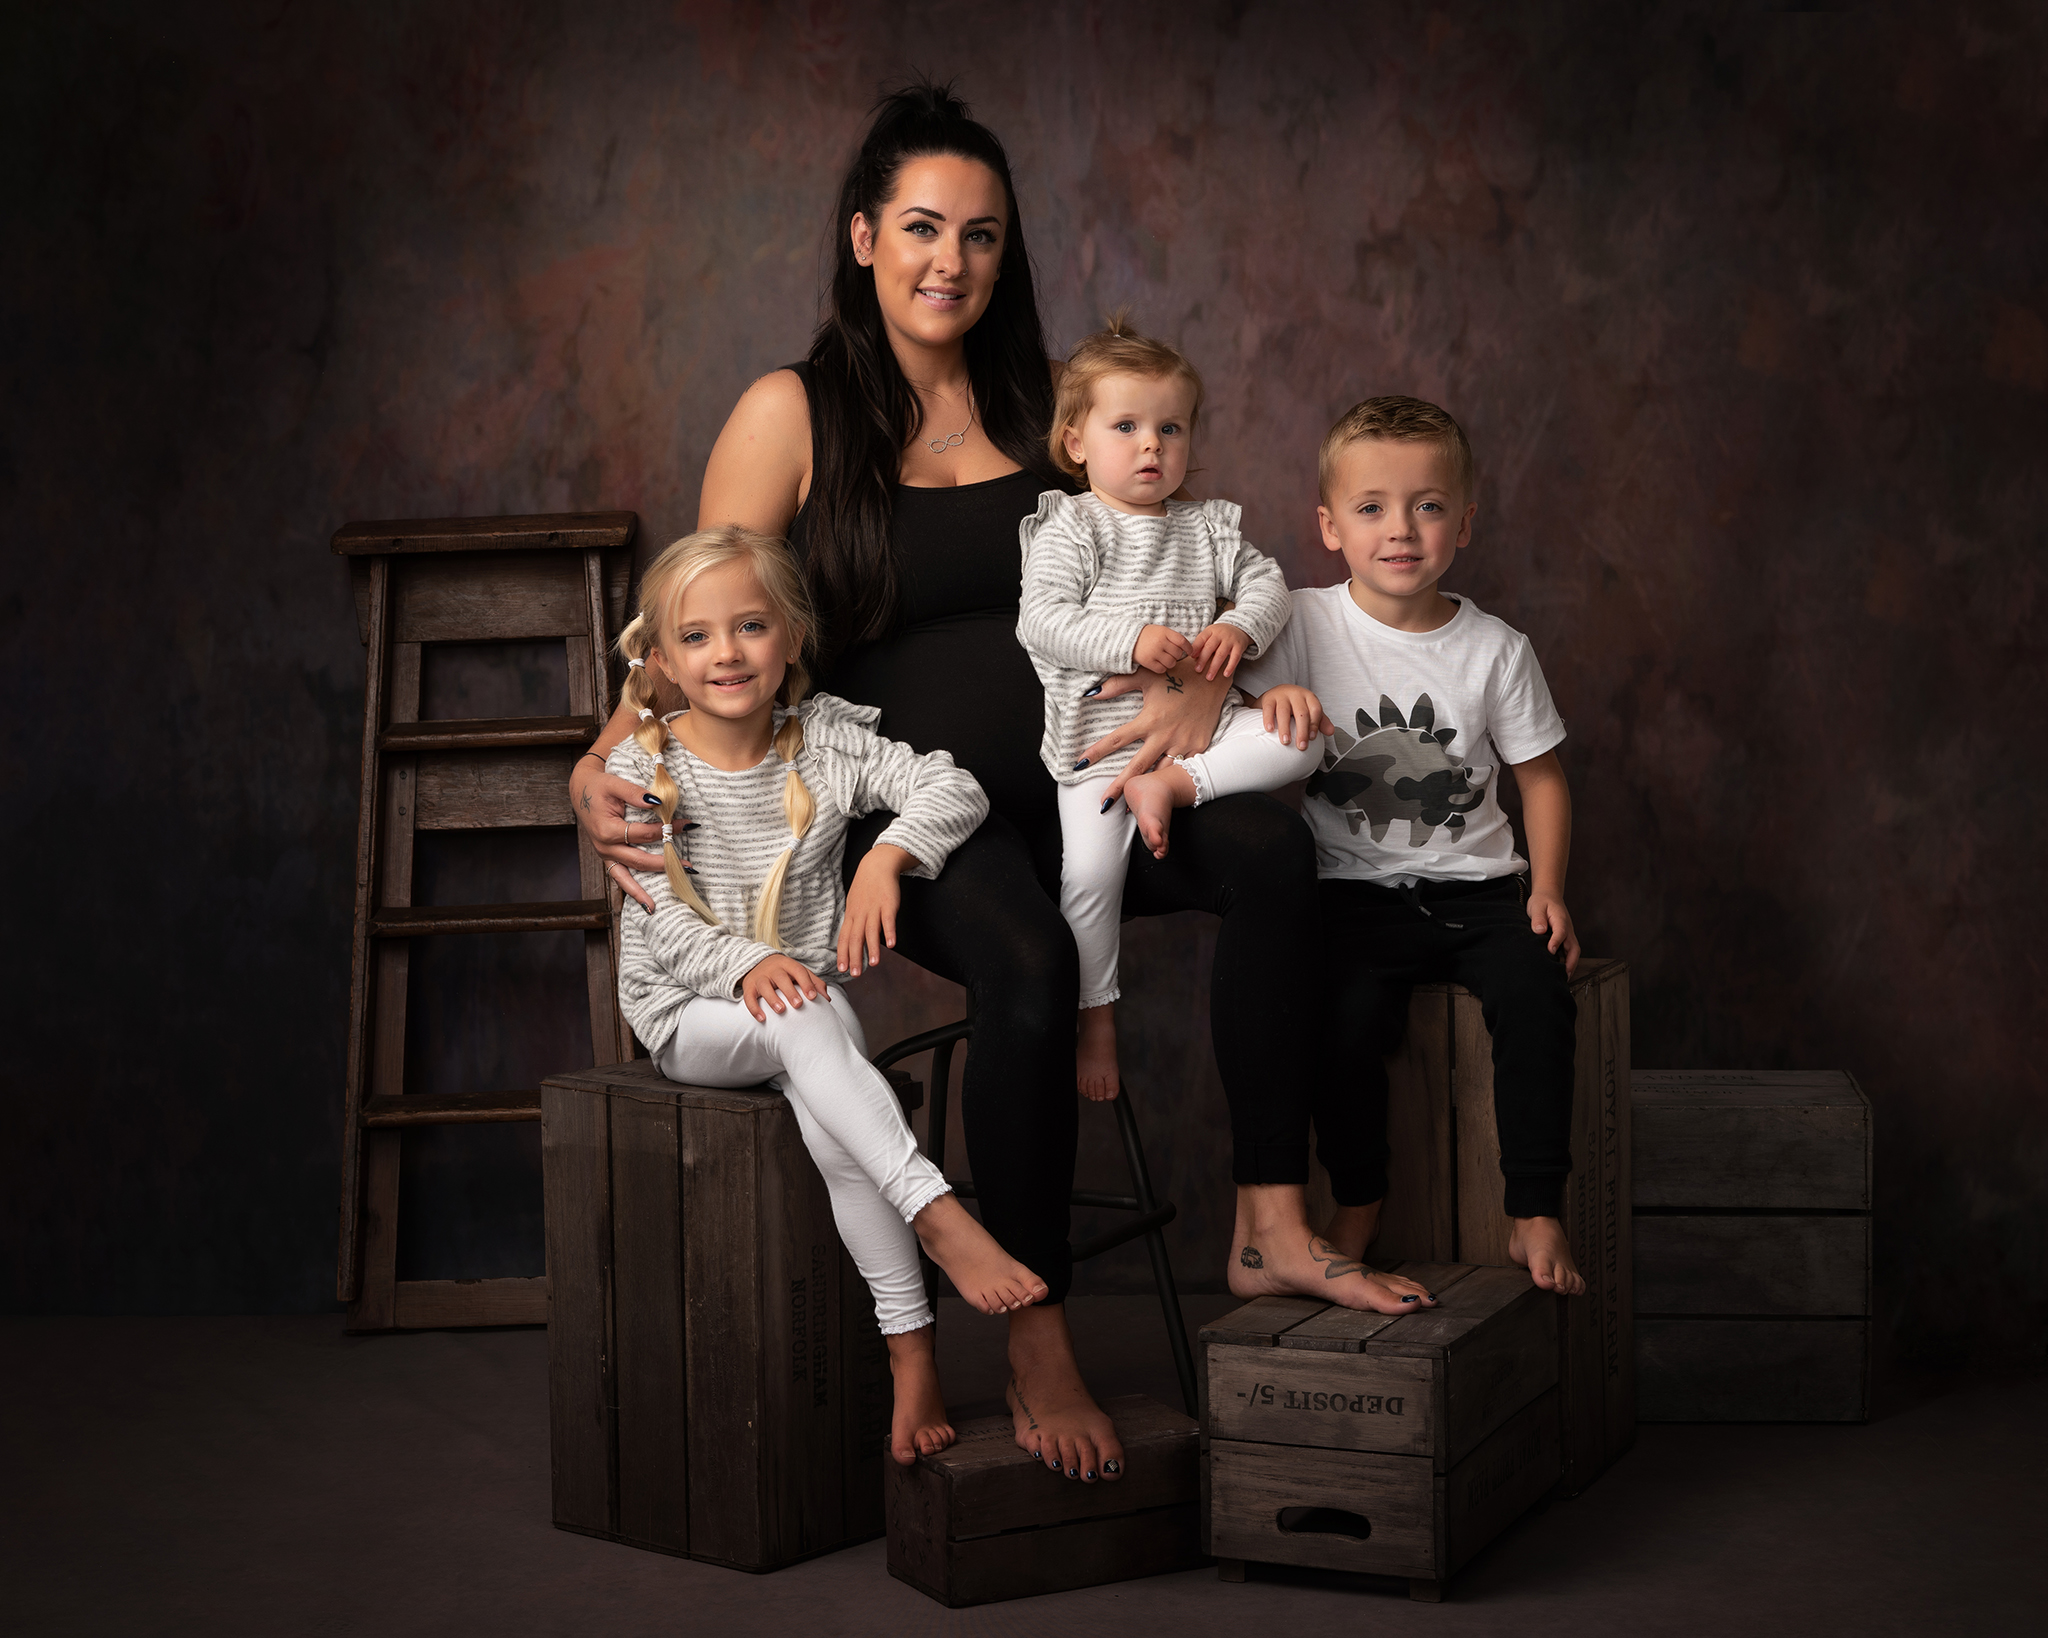 mum with children studio portrait by Family photographer Lancashire